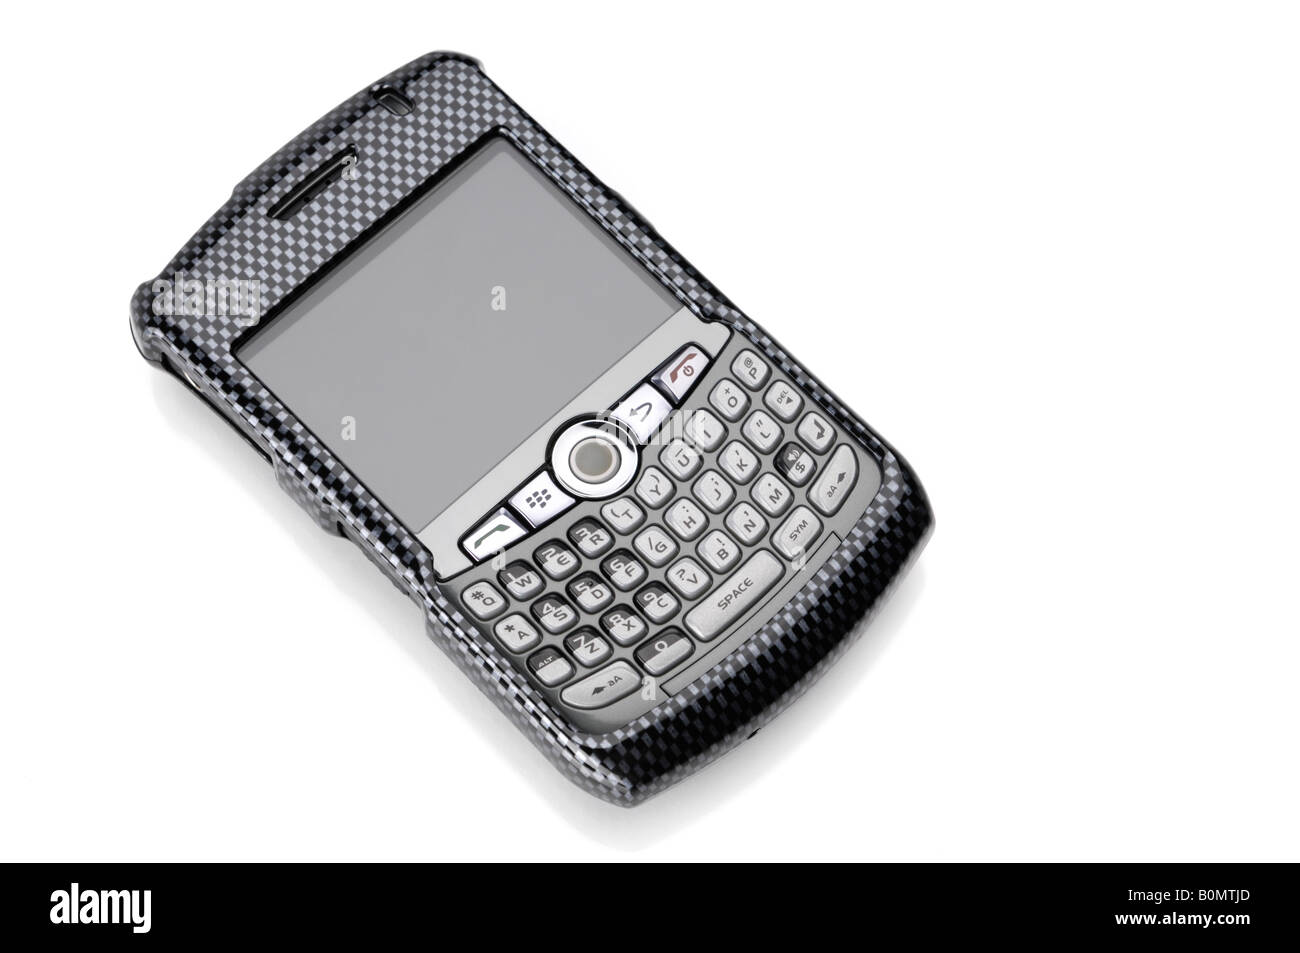 BlackBerry 8310 Curve Smartphone Stock Photo